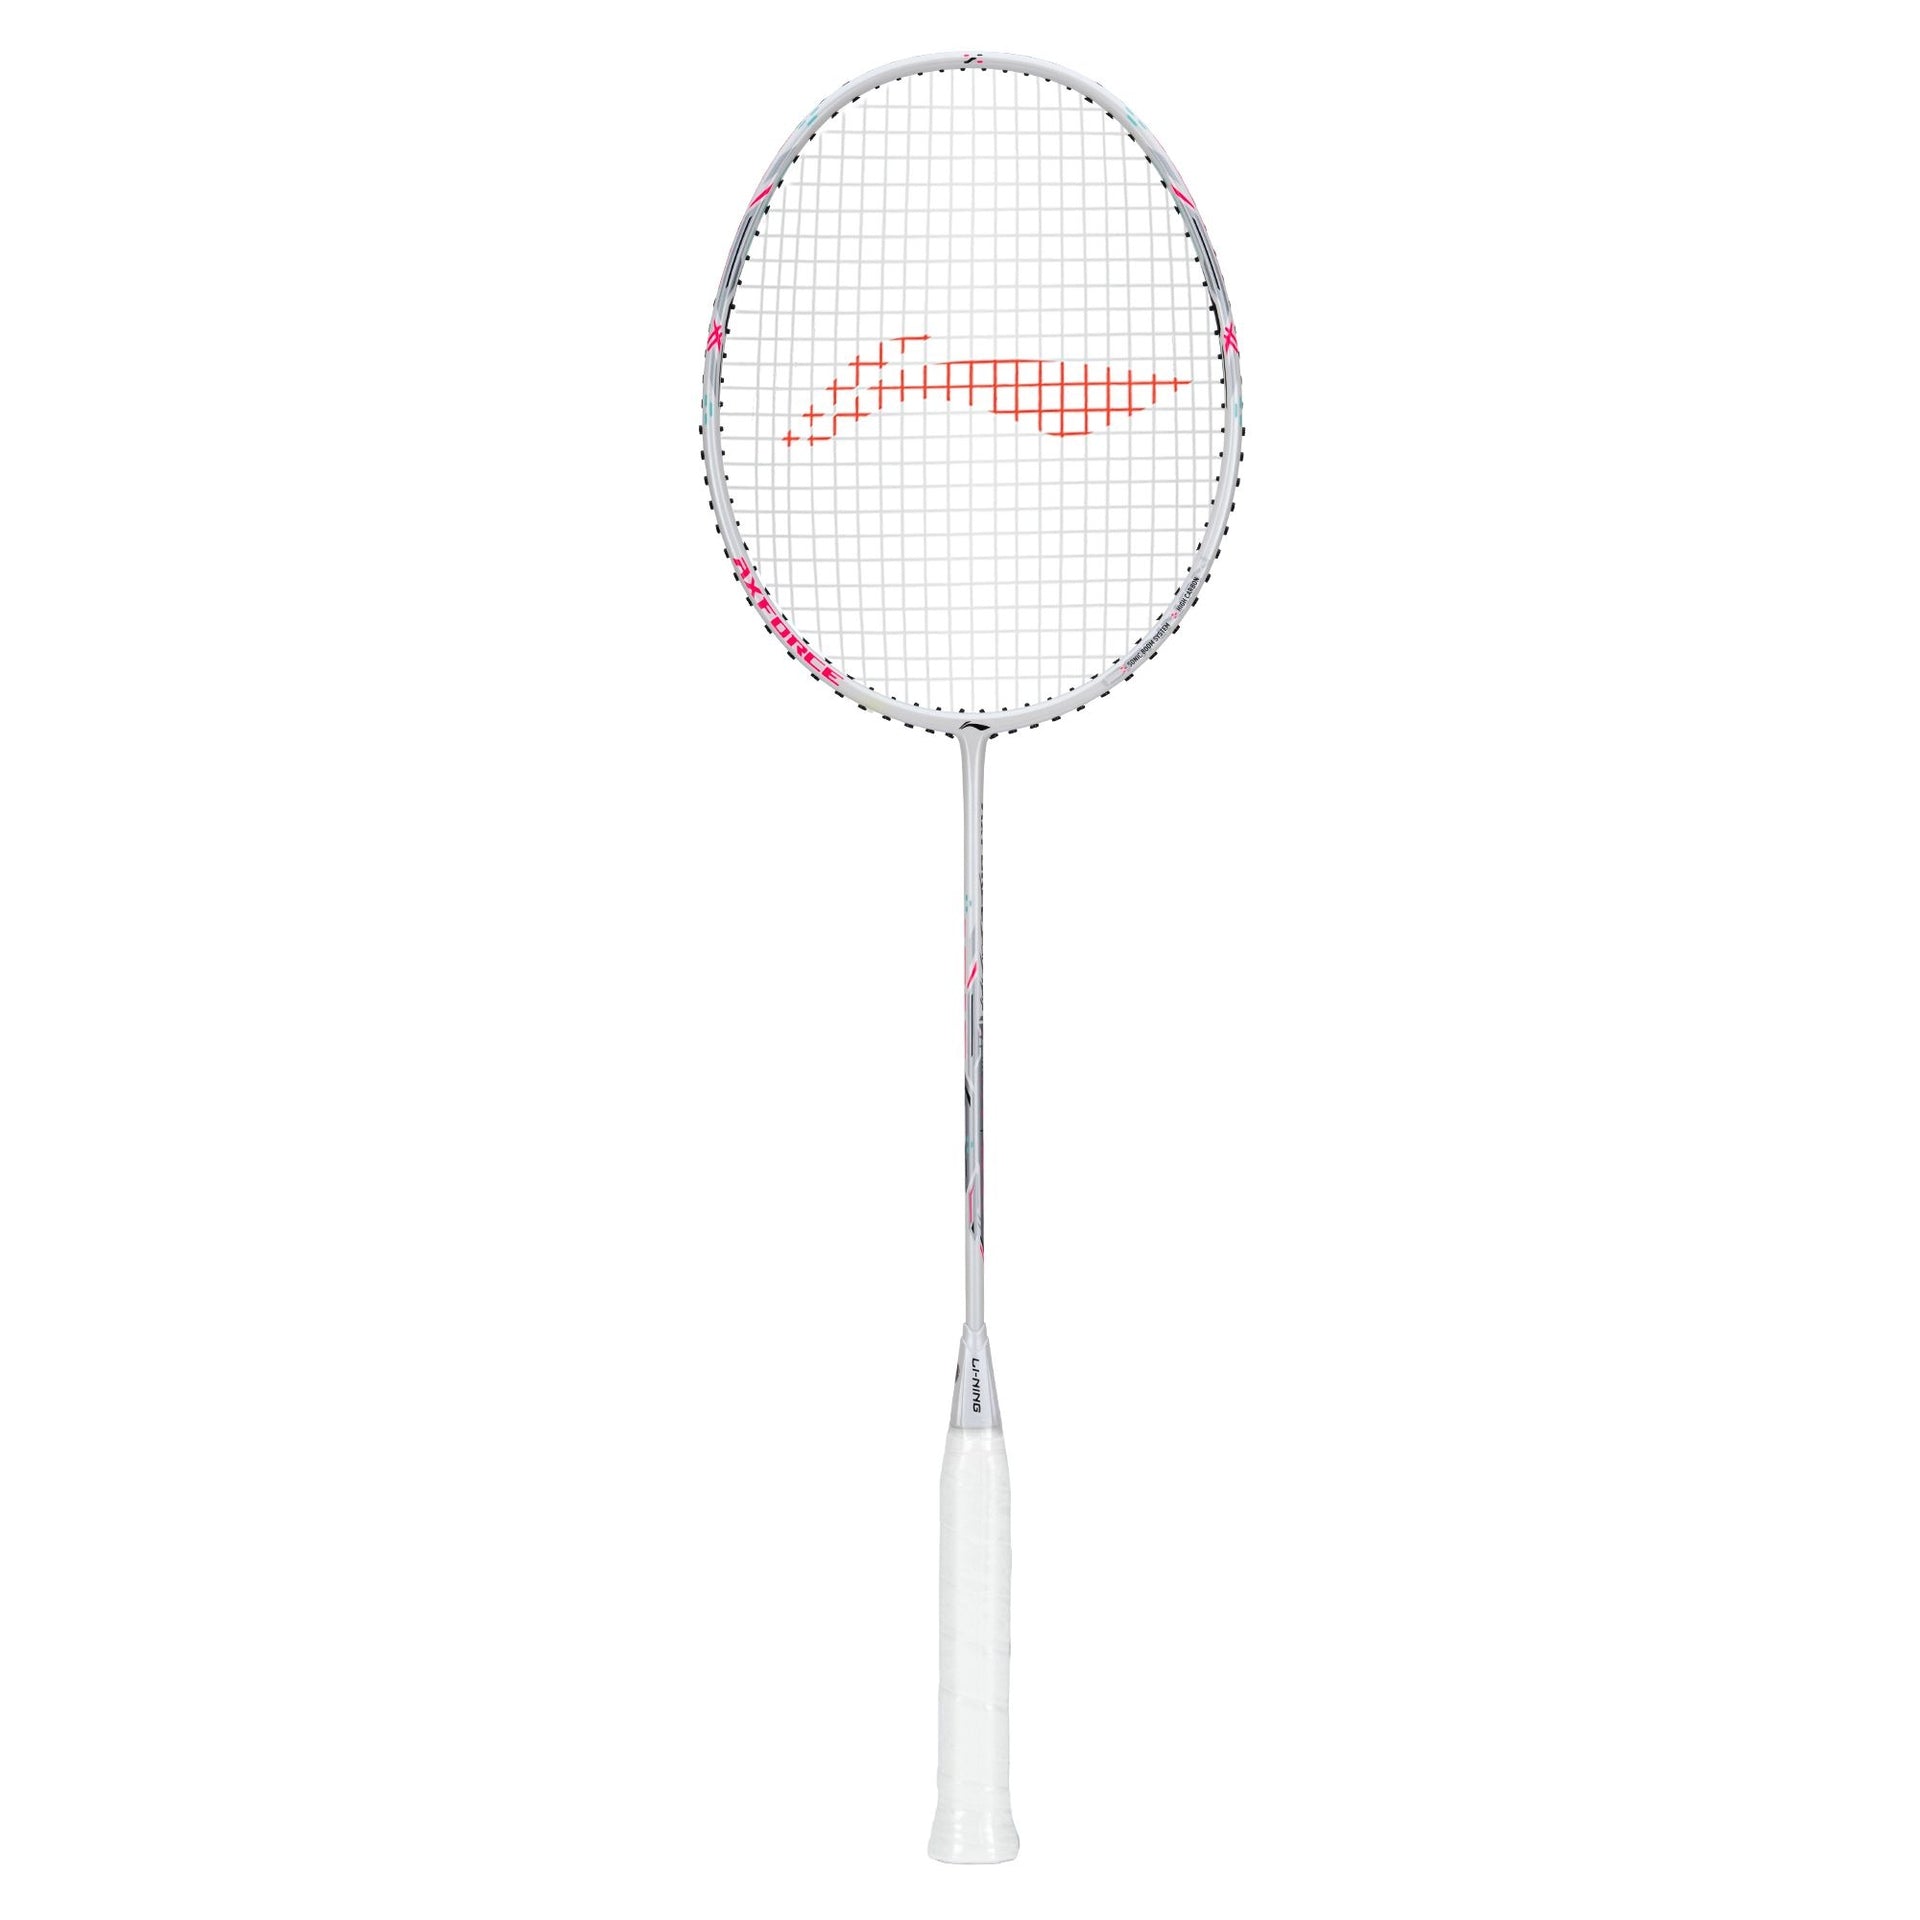 LI-NING AXFORCE Cannon Badminton Racket